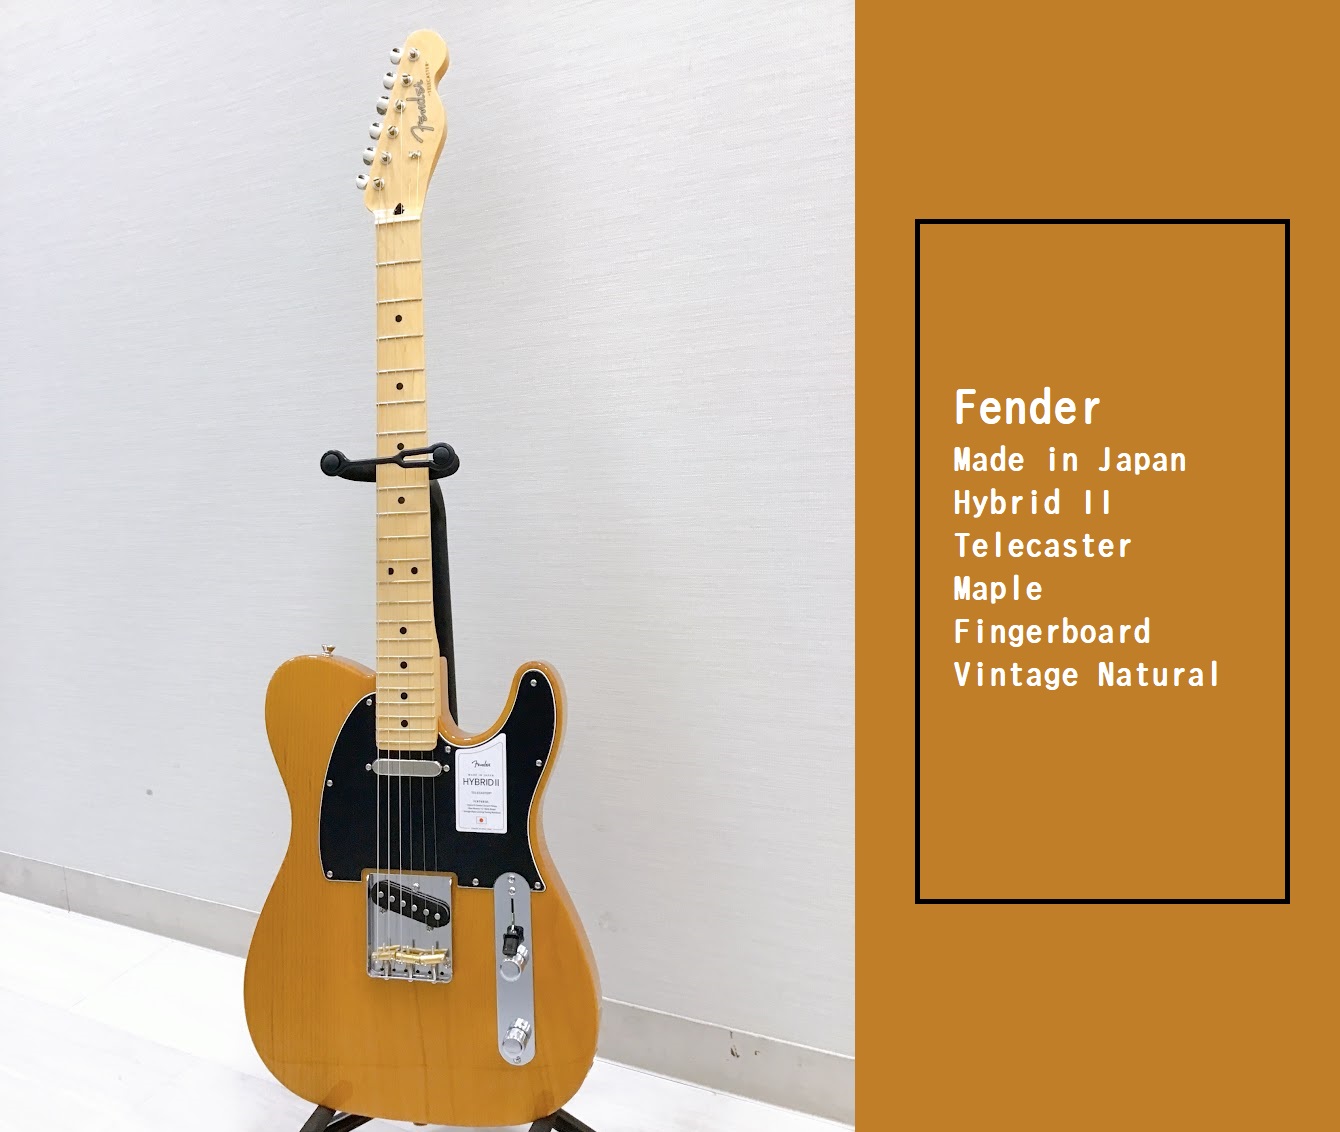 Fender Made in Japan Hybrid II Telecaster Maple Fingerboard